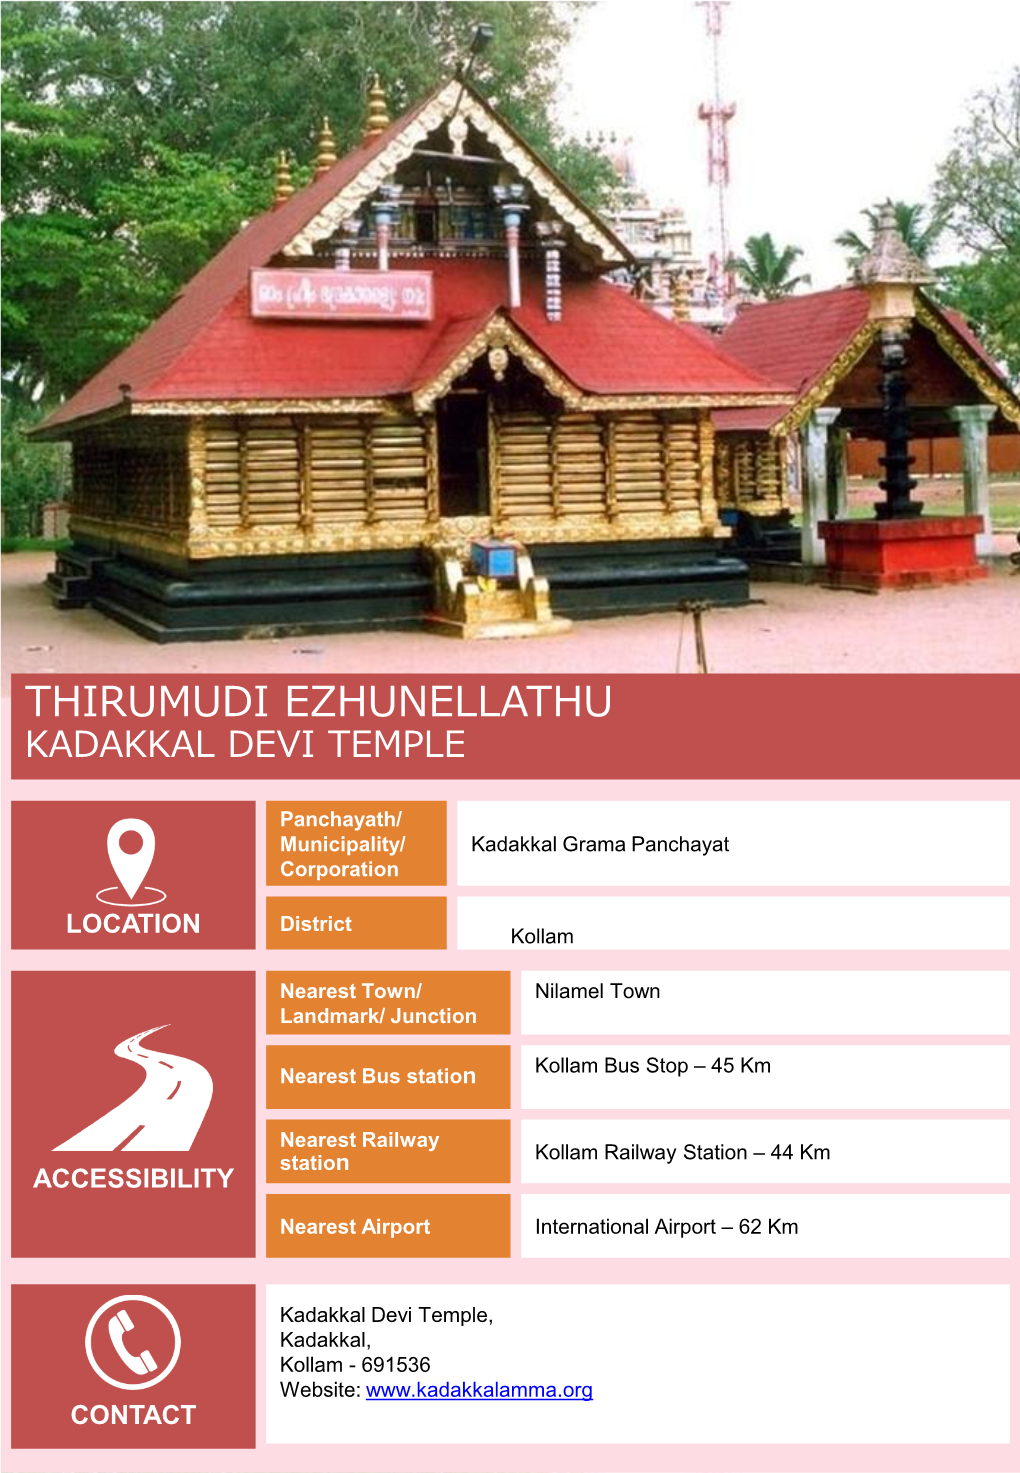 Thirumudi Ezhunellathu Kadakkal Devi Temple